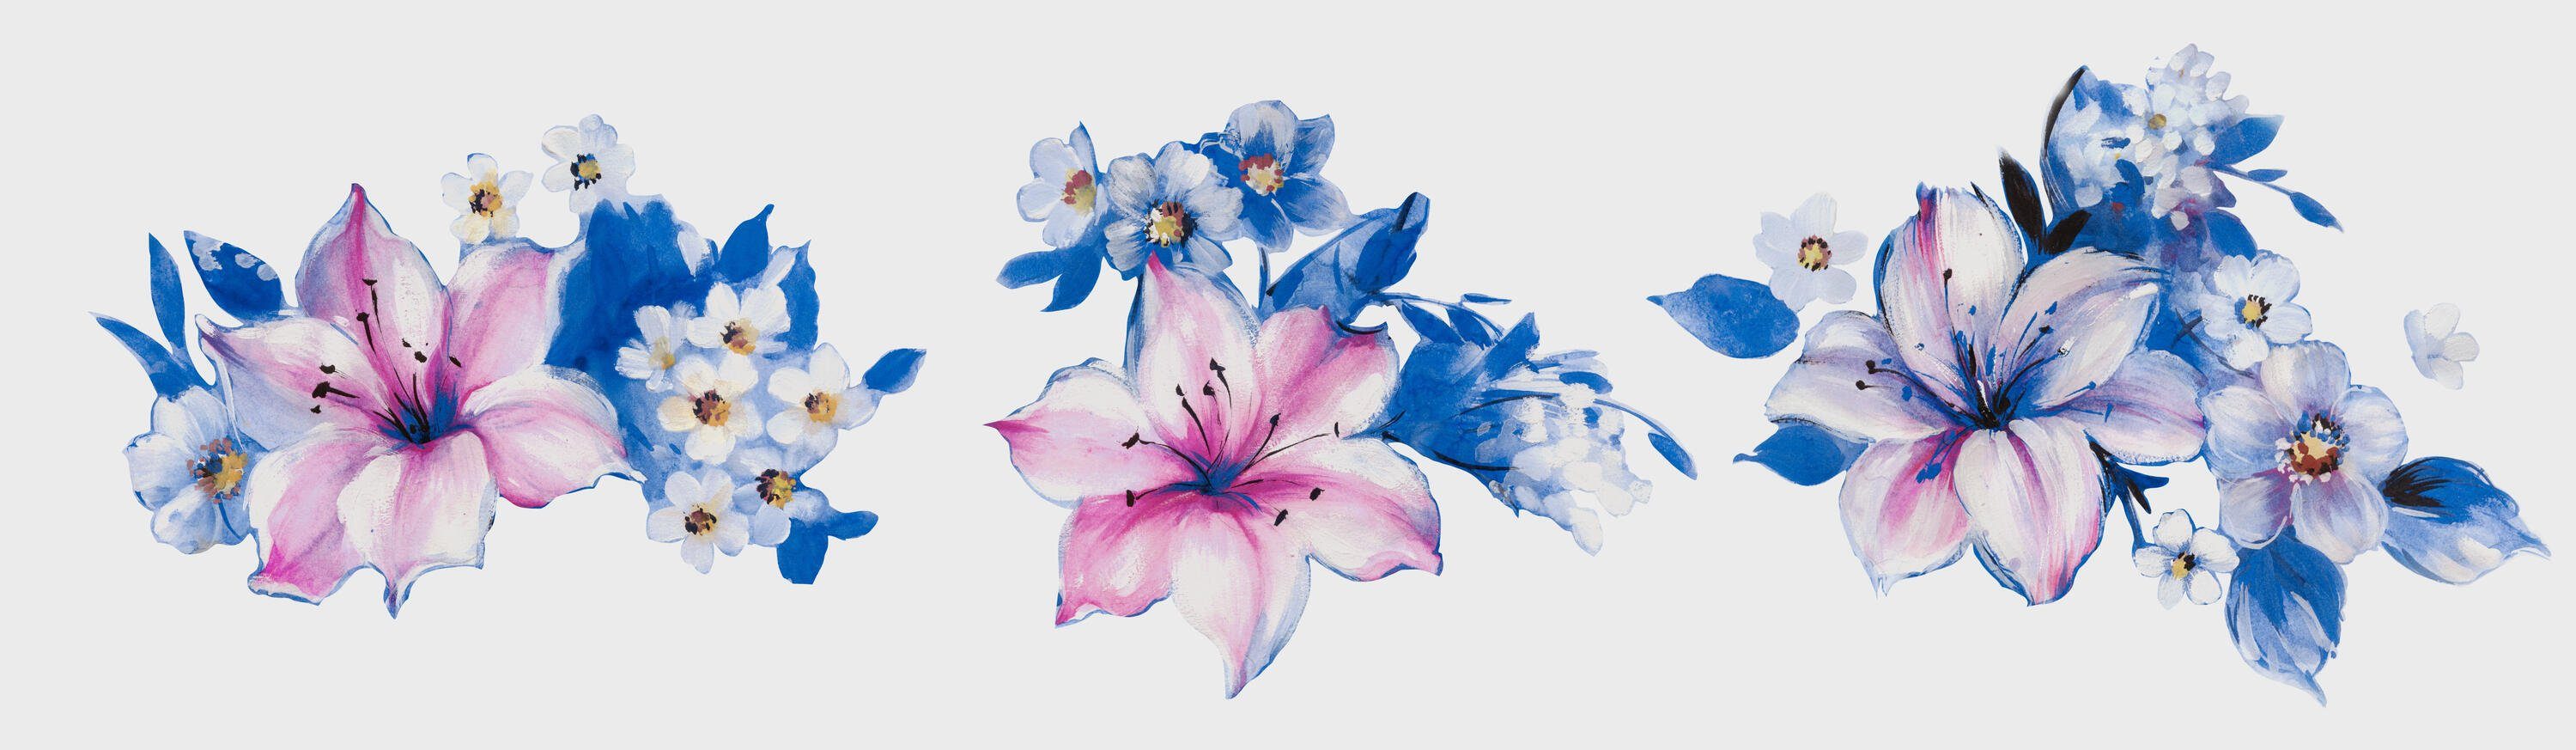 wandmotiv24 Fototapete Muster Blumen Blau, glatt, Wandtapete, Motivtapete, matt, Vliestapete